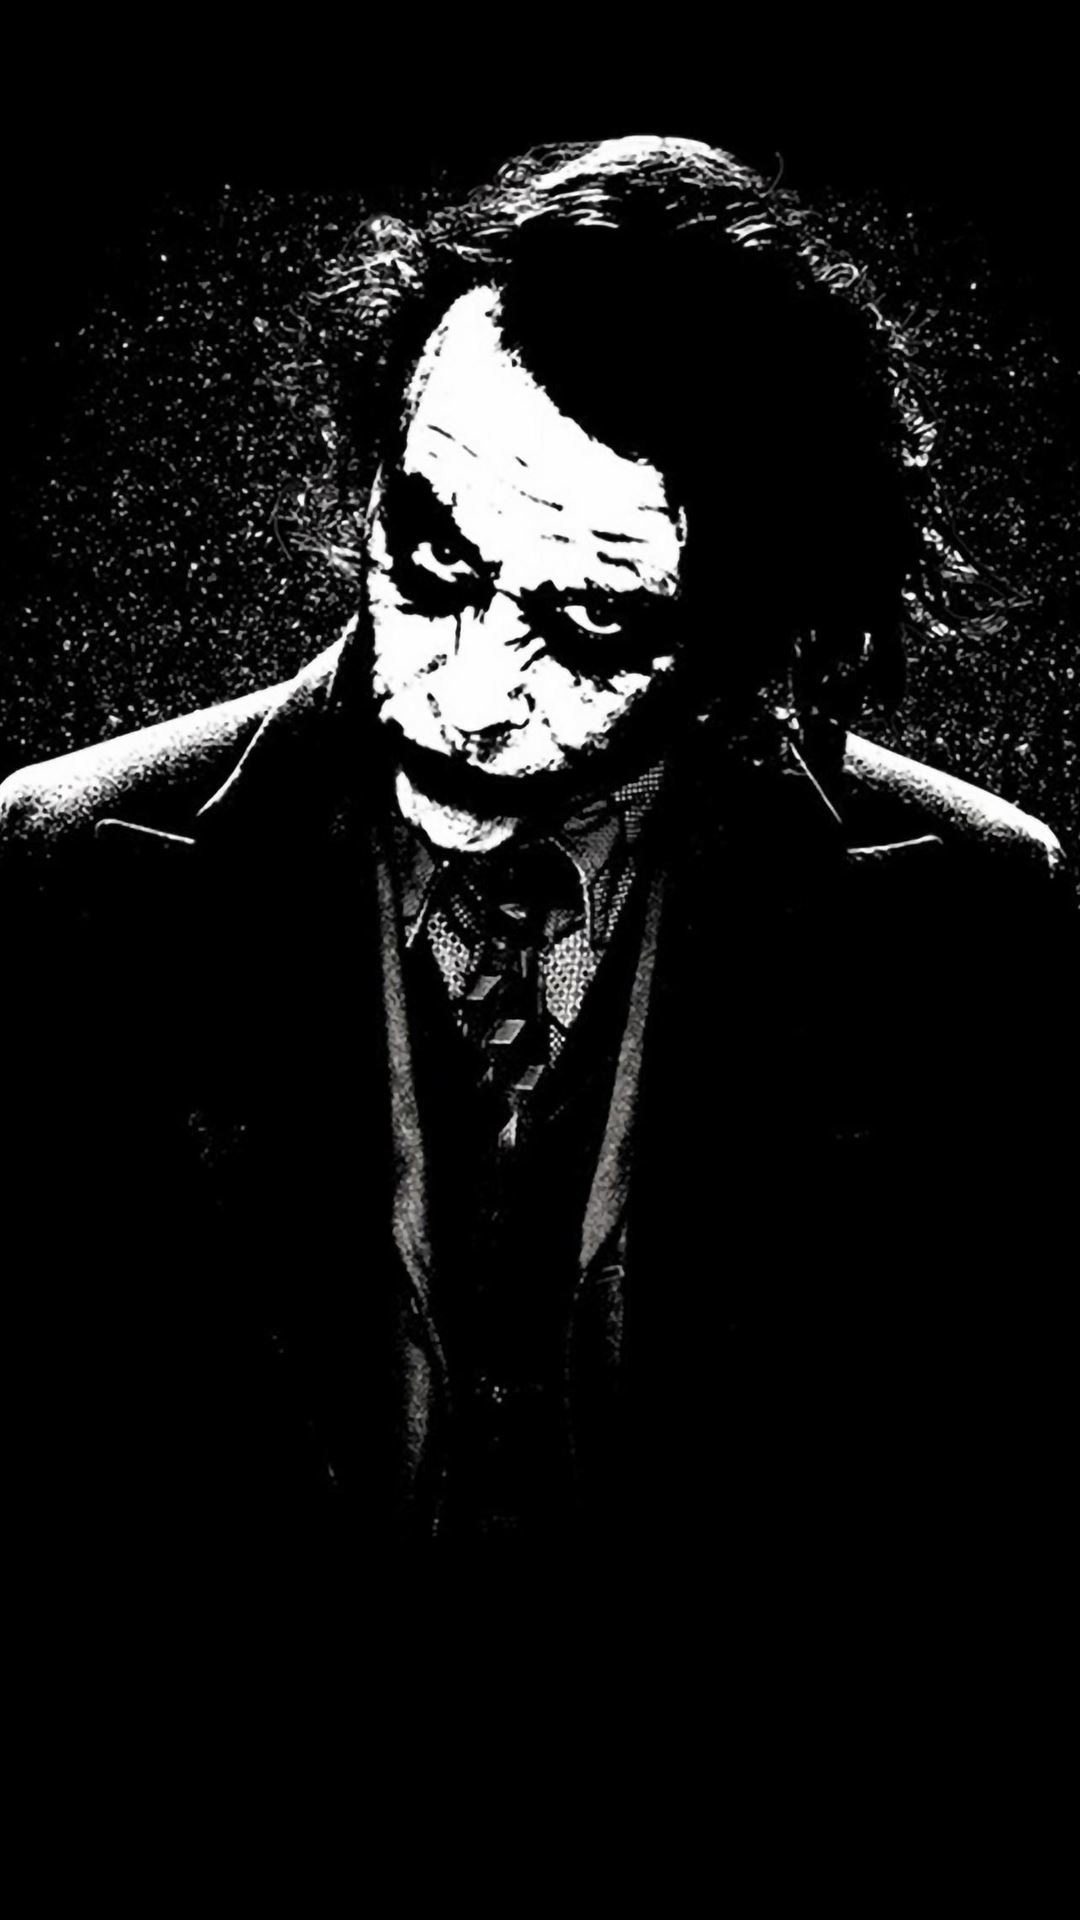 The Joker Batman Black White Painting Art iPhone Wallpaper Free Download